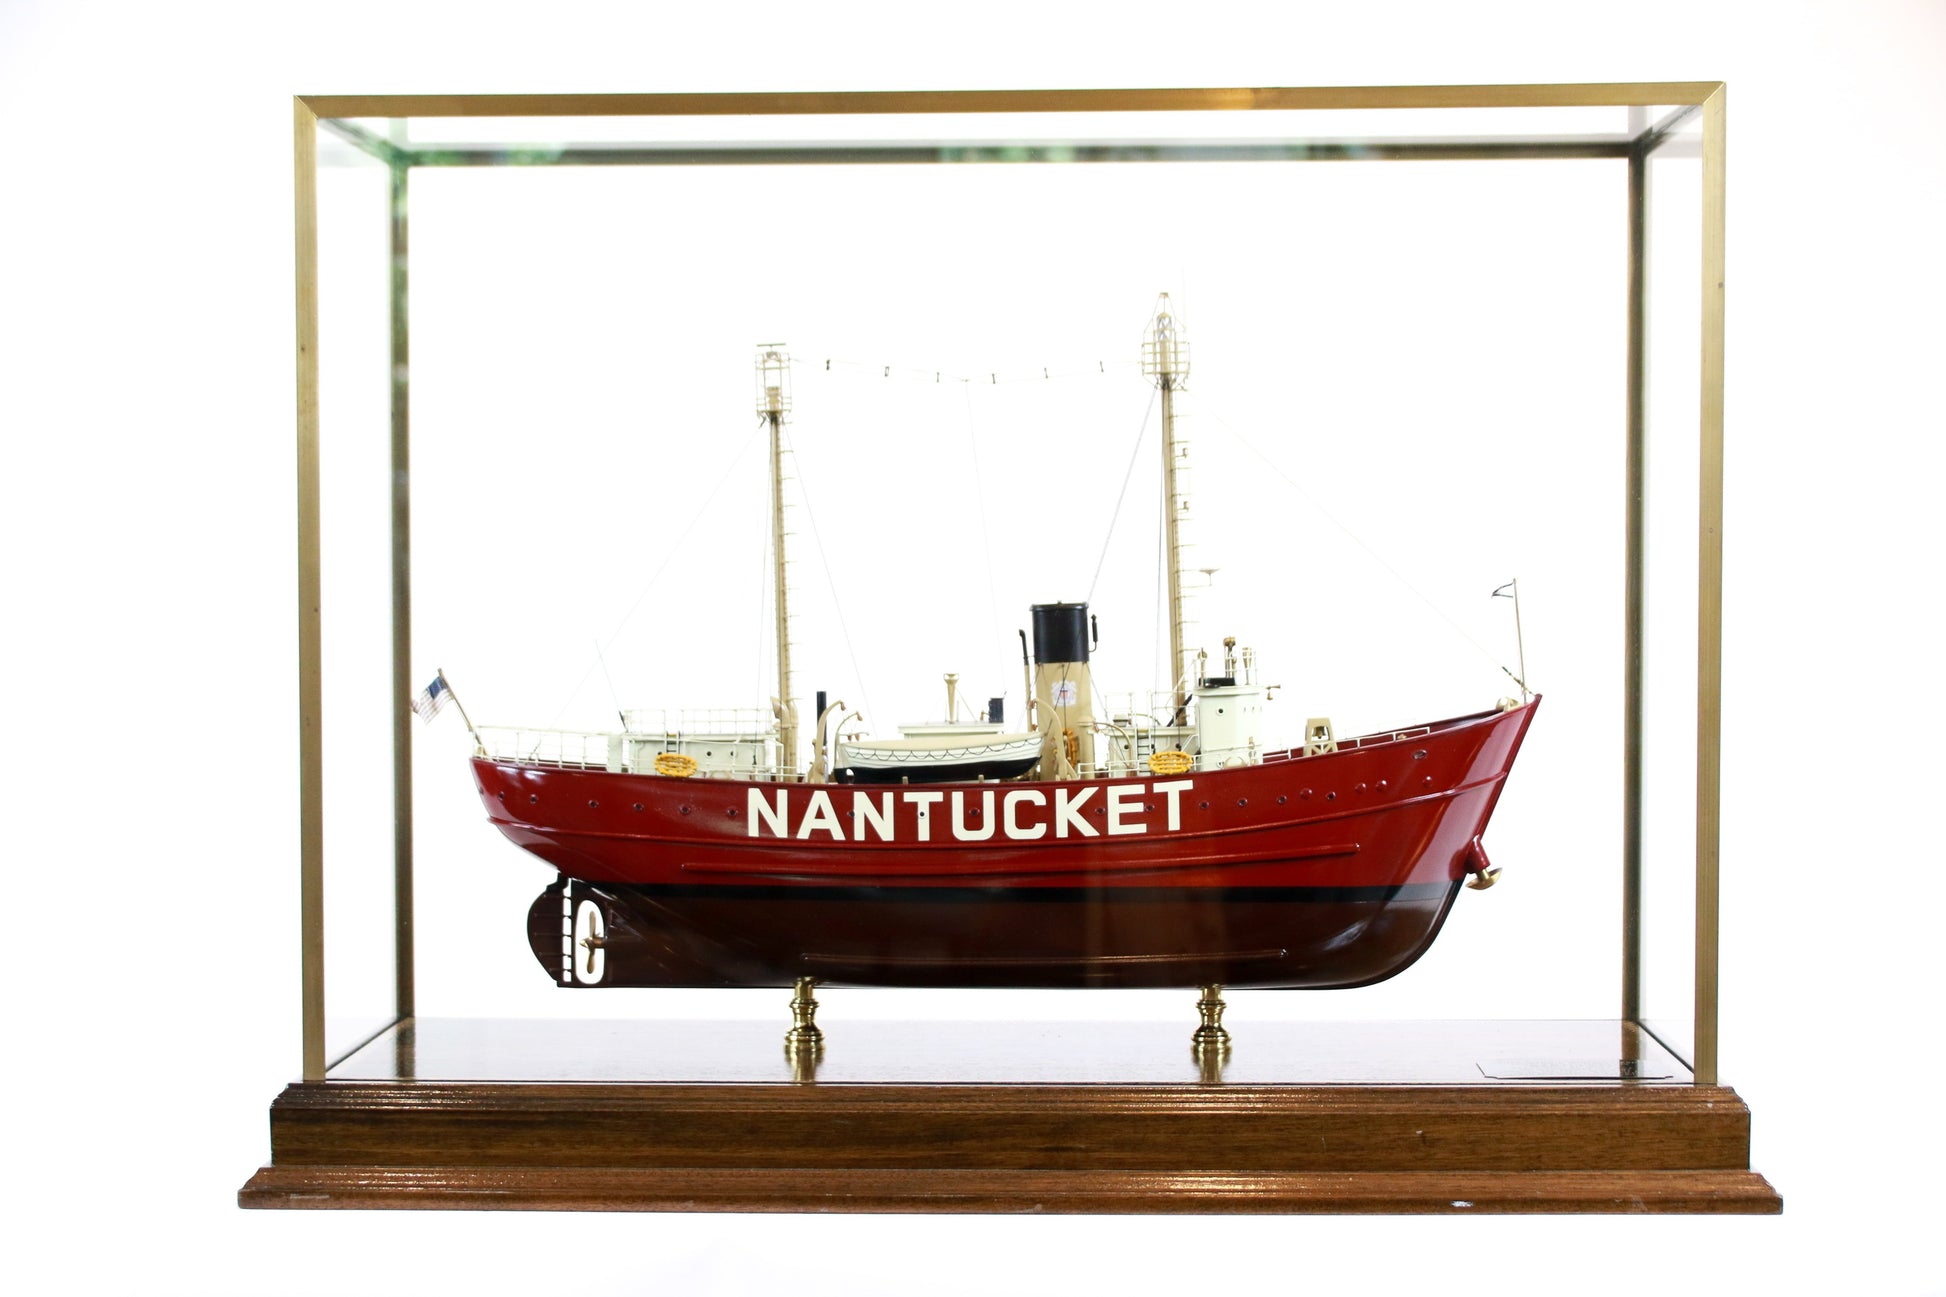 Coast Guard Lightship "Nantucket" LV-112 - Lannan Gallery